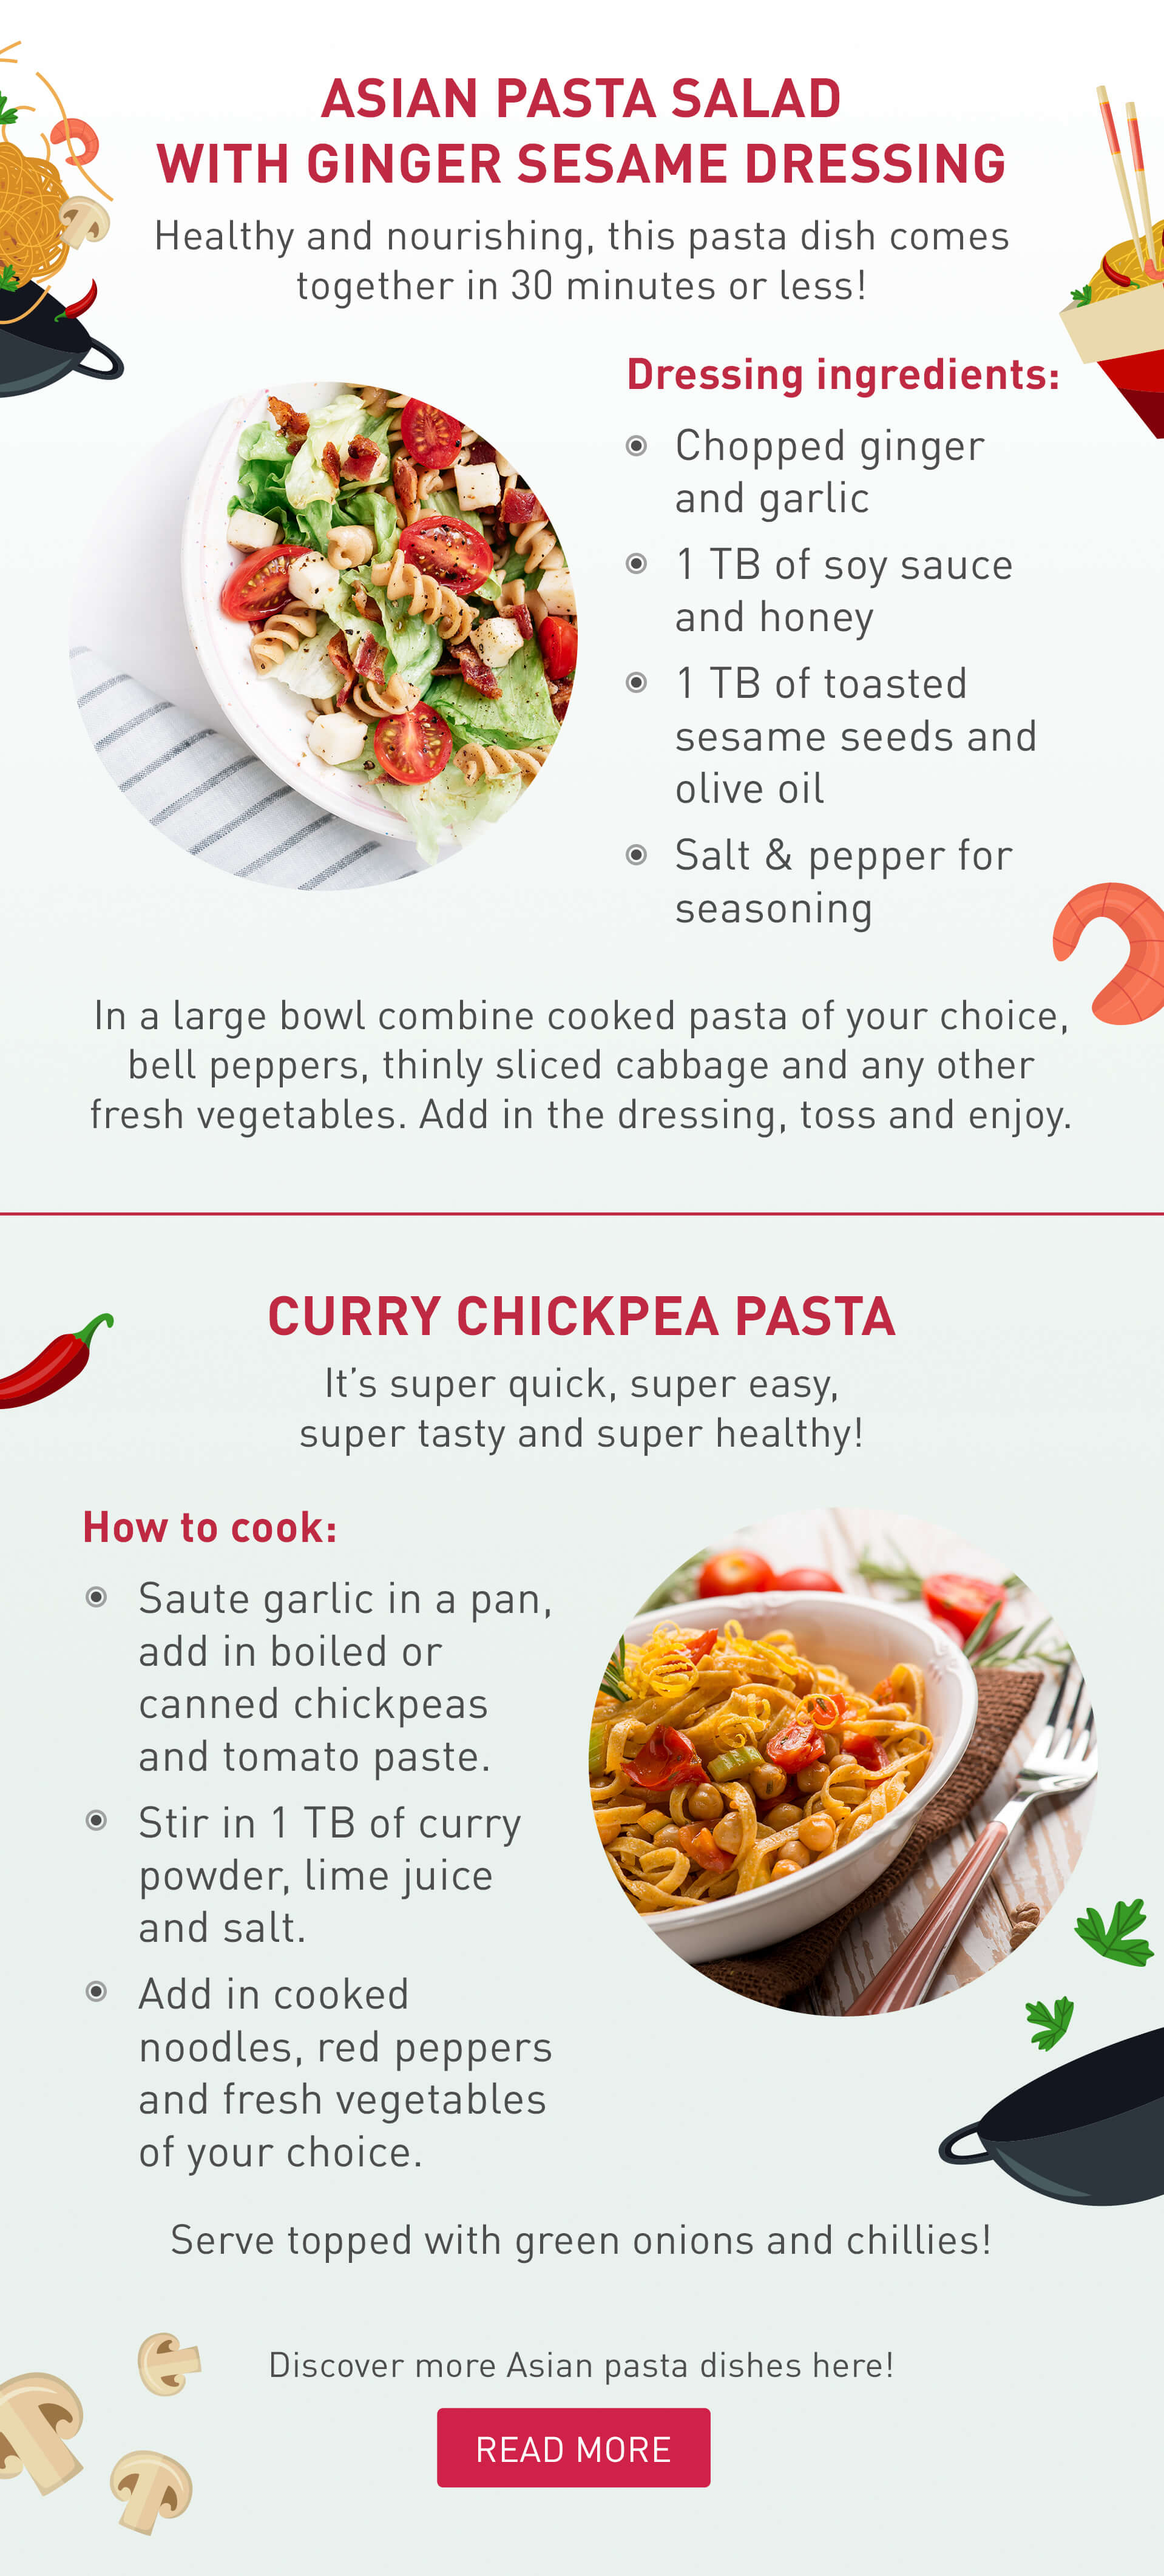 Asian inspired pasta recipes